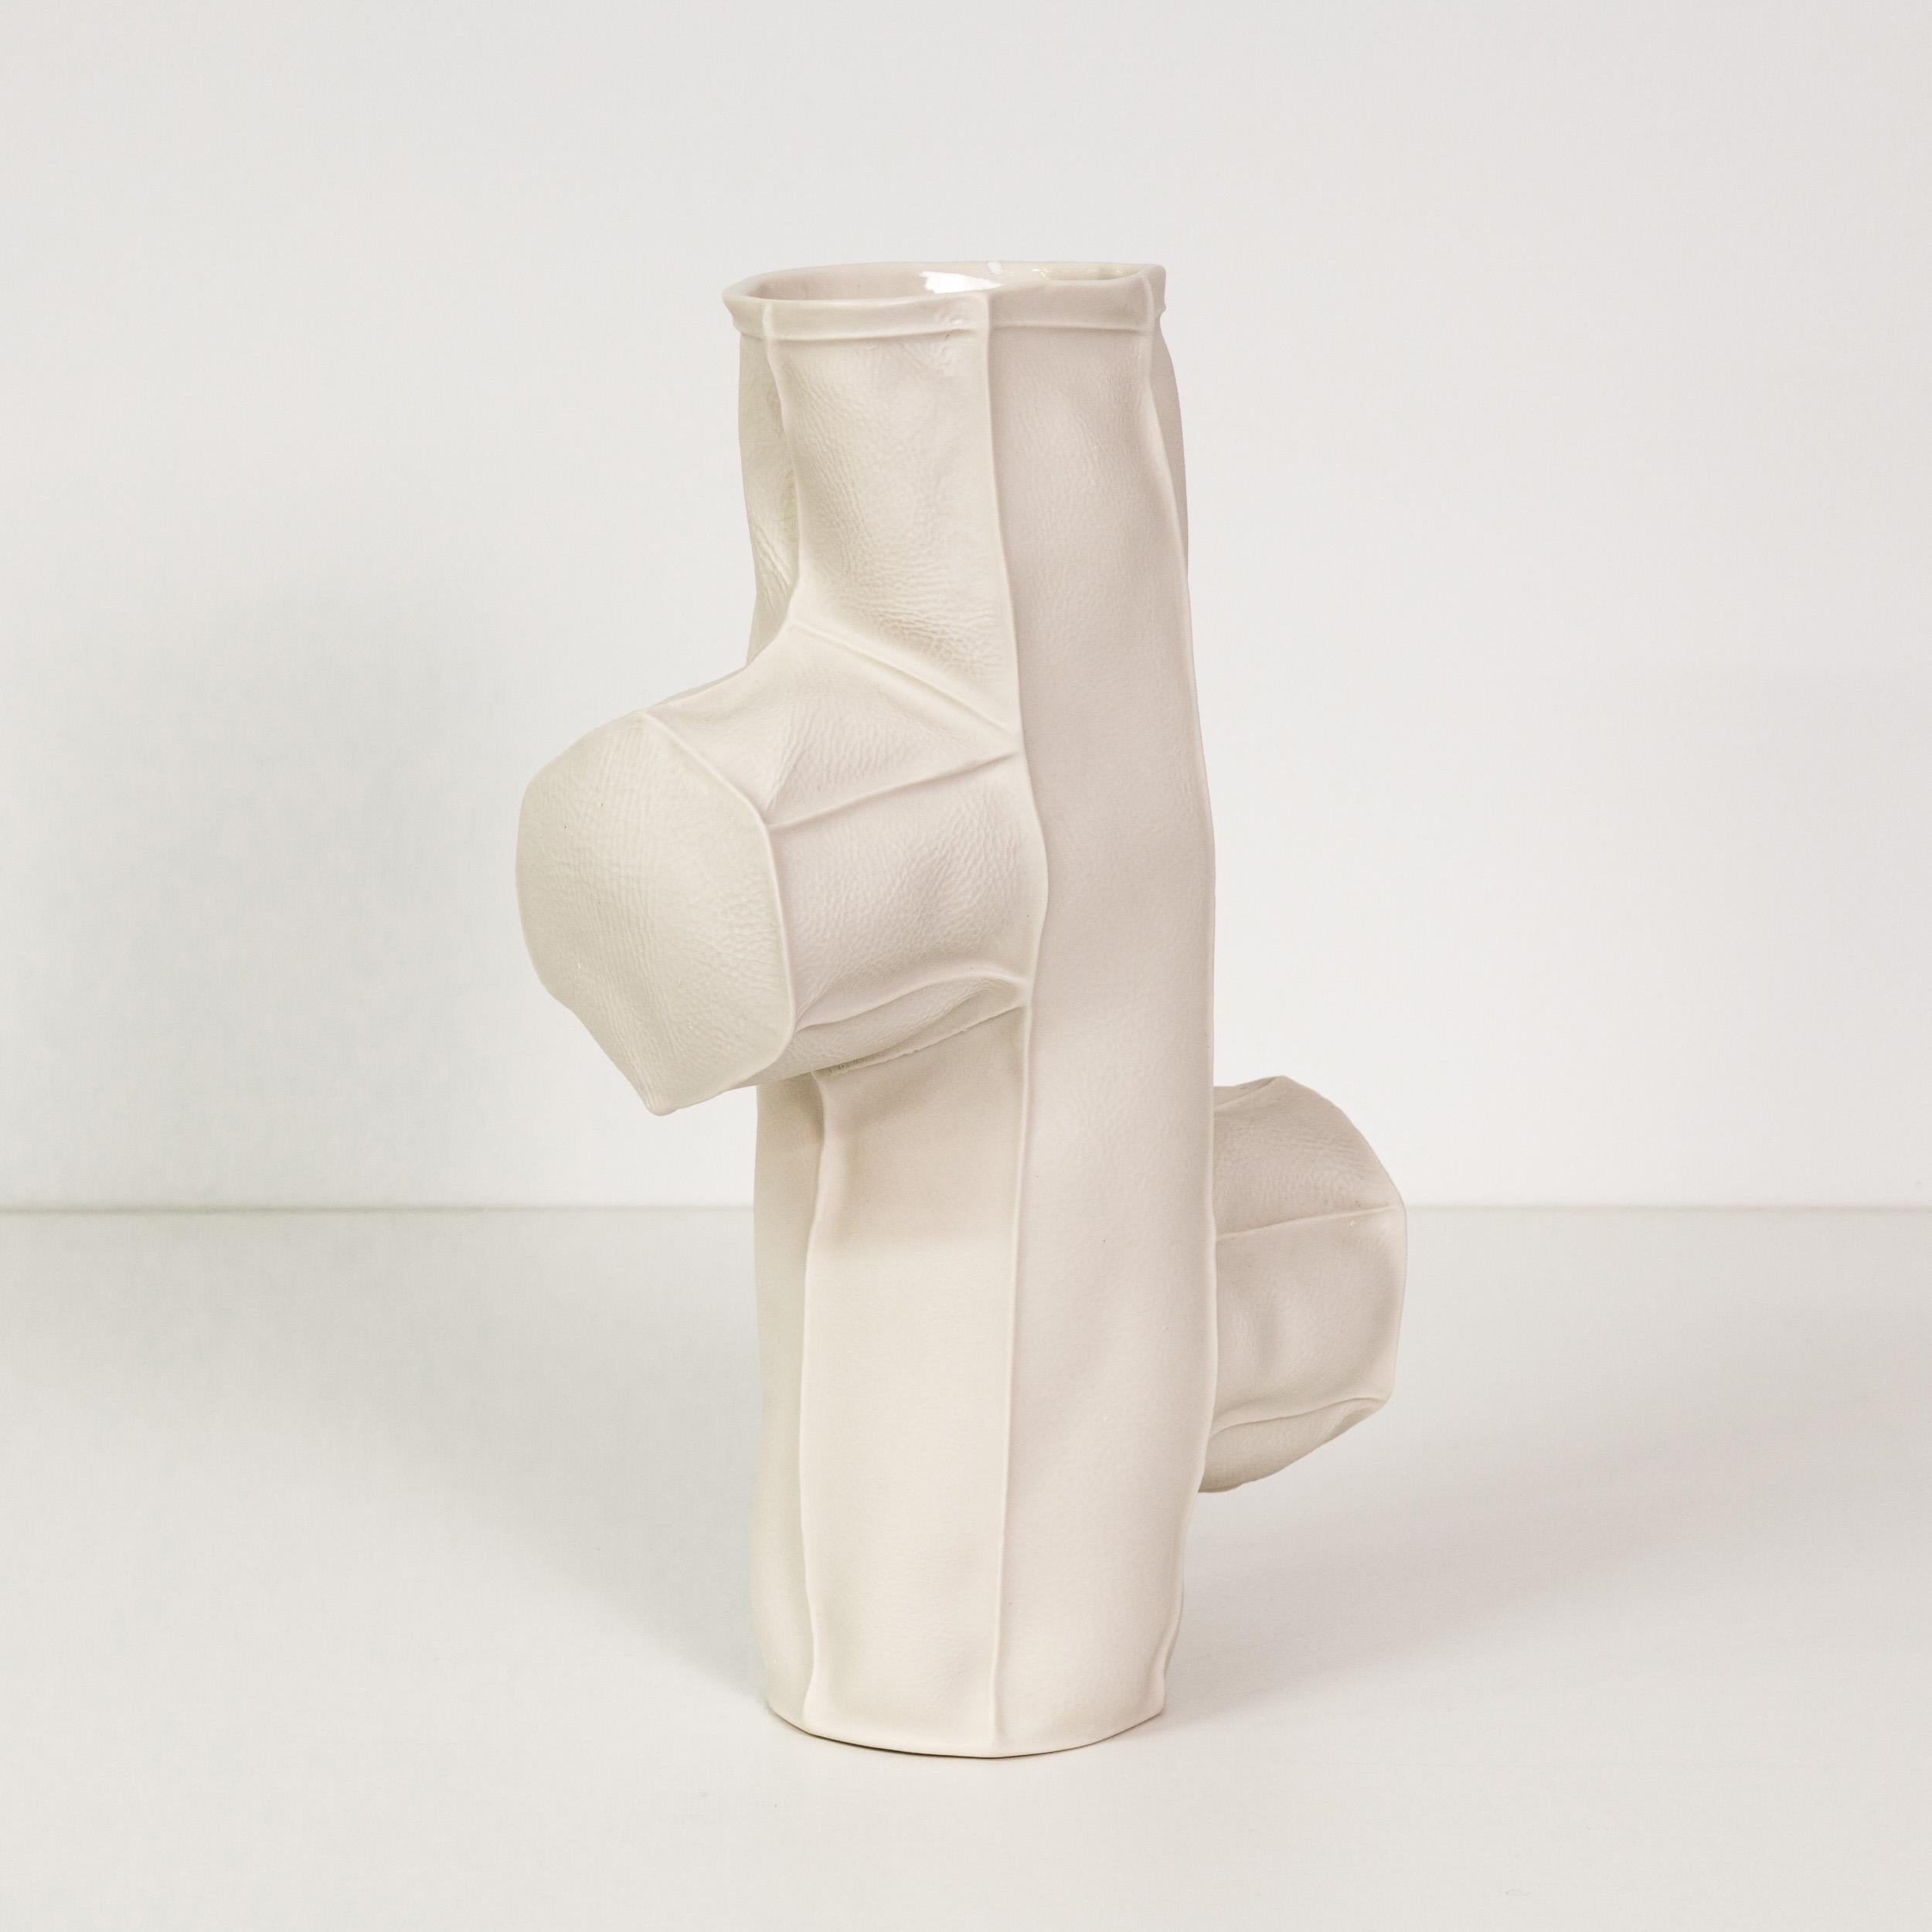 Moderne En stock Vase Kawa Vase en céramique 18 sculpture organique de forme libre texture cuir SECOND en vente